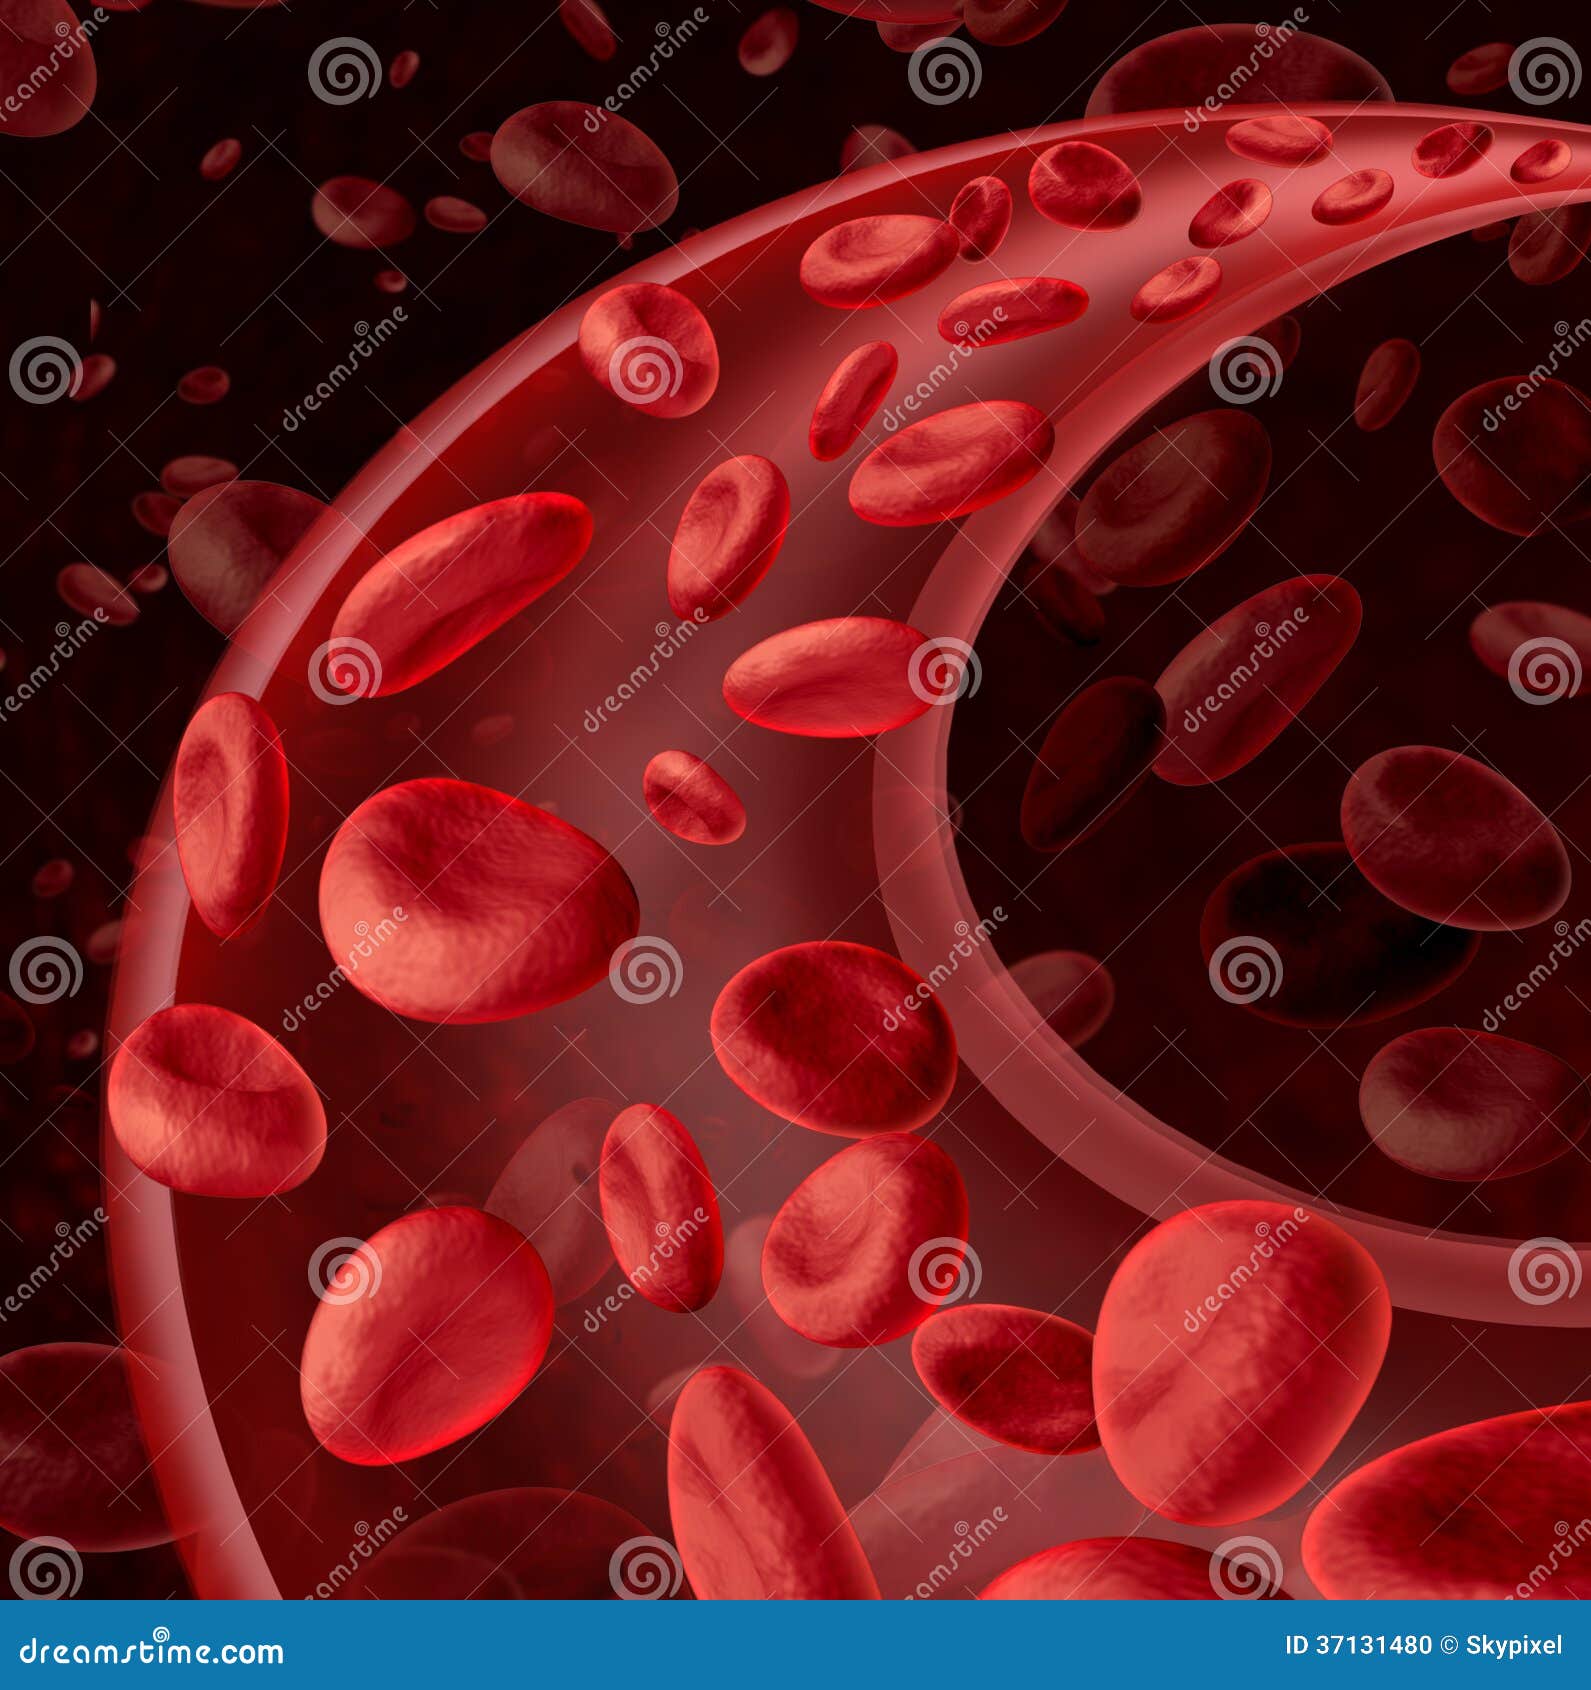 blood cells circulation